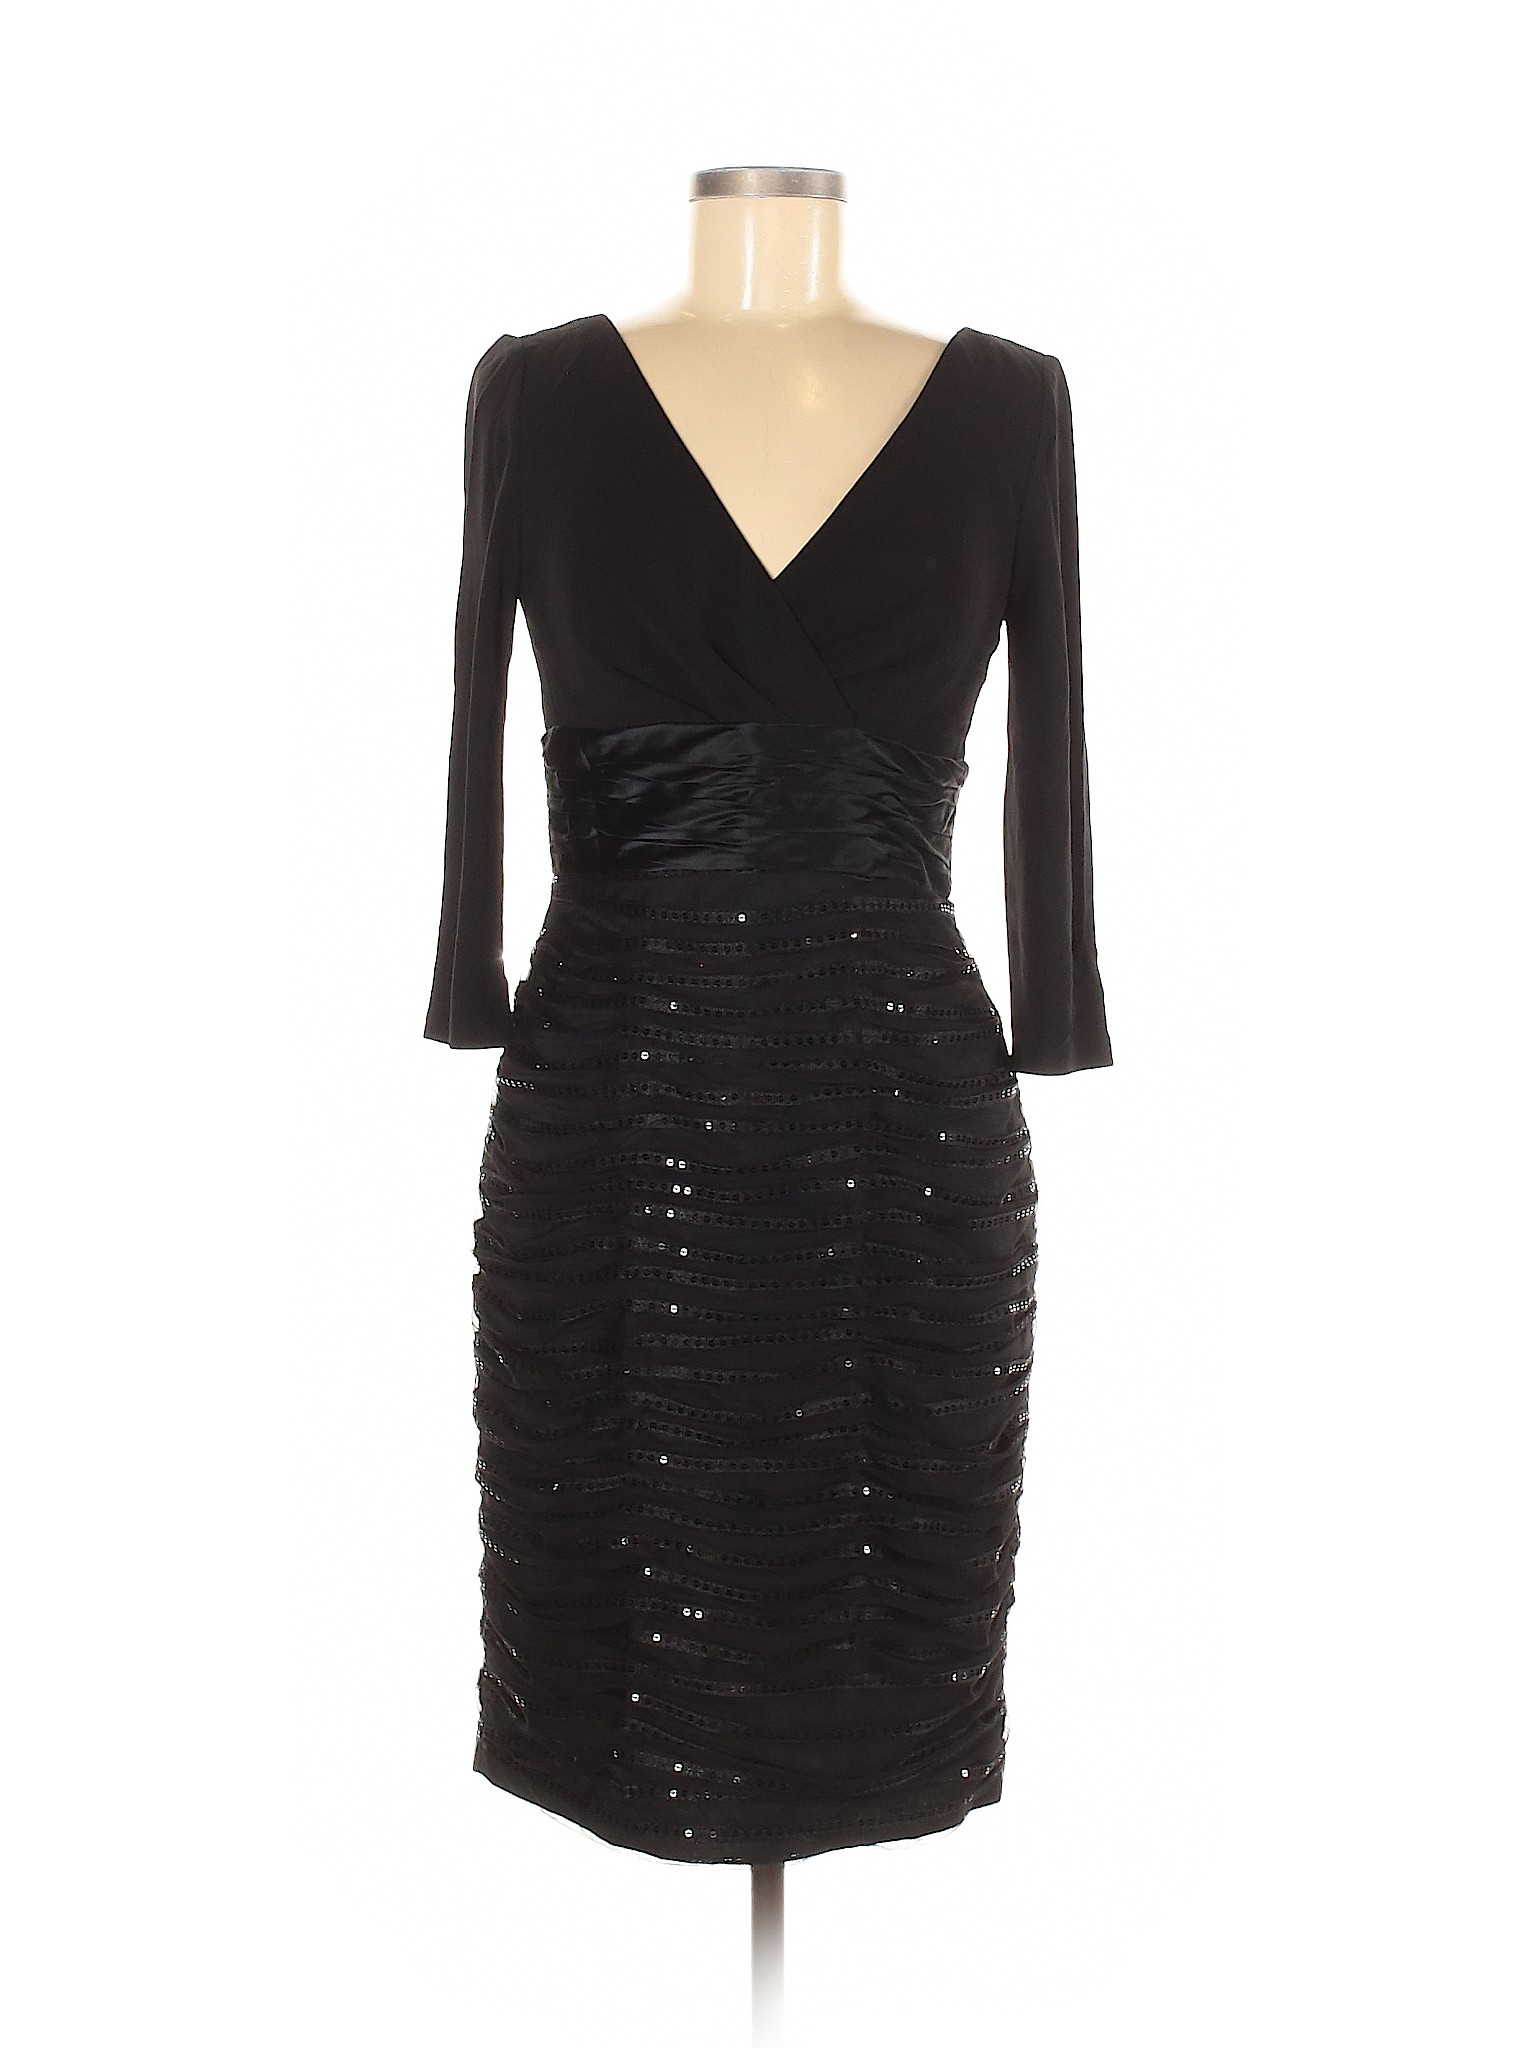 Kay Unger Women Black Cocktail Dress 6 | eBay